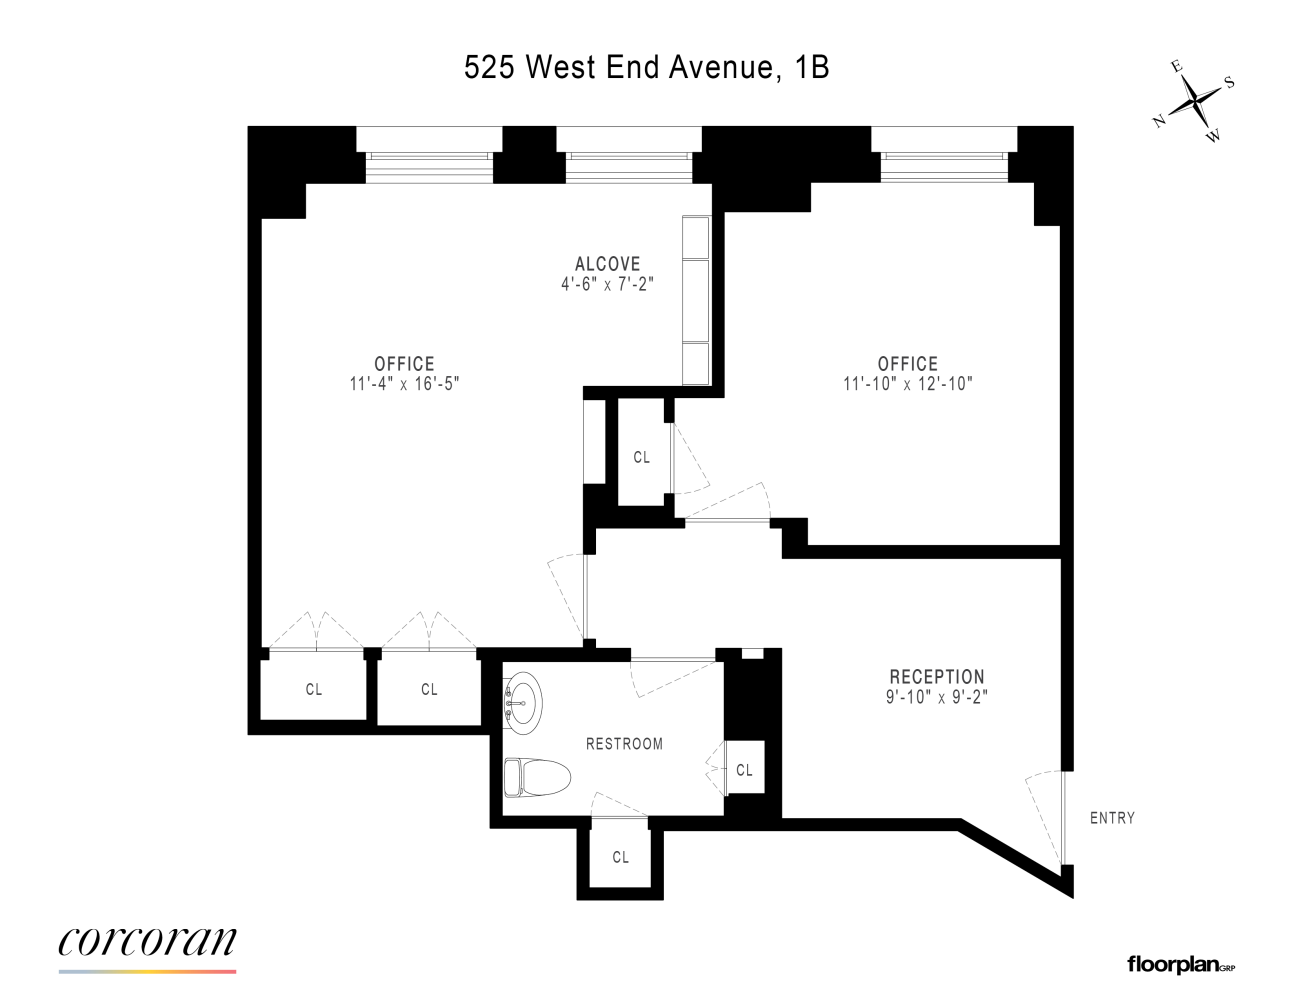 Floorplan for 525 West End Avenue, 1B